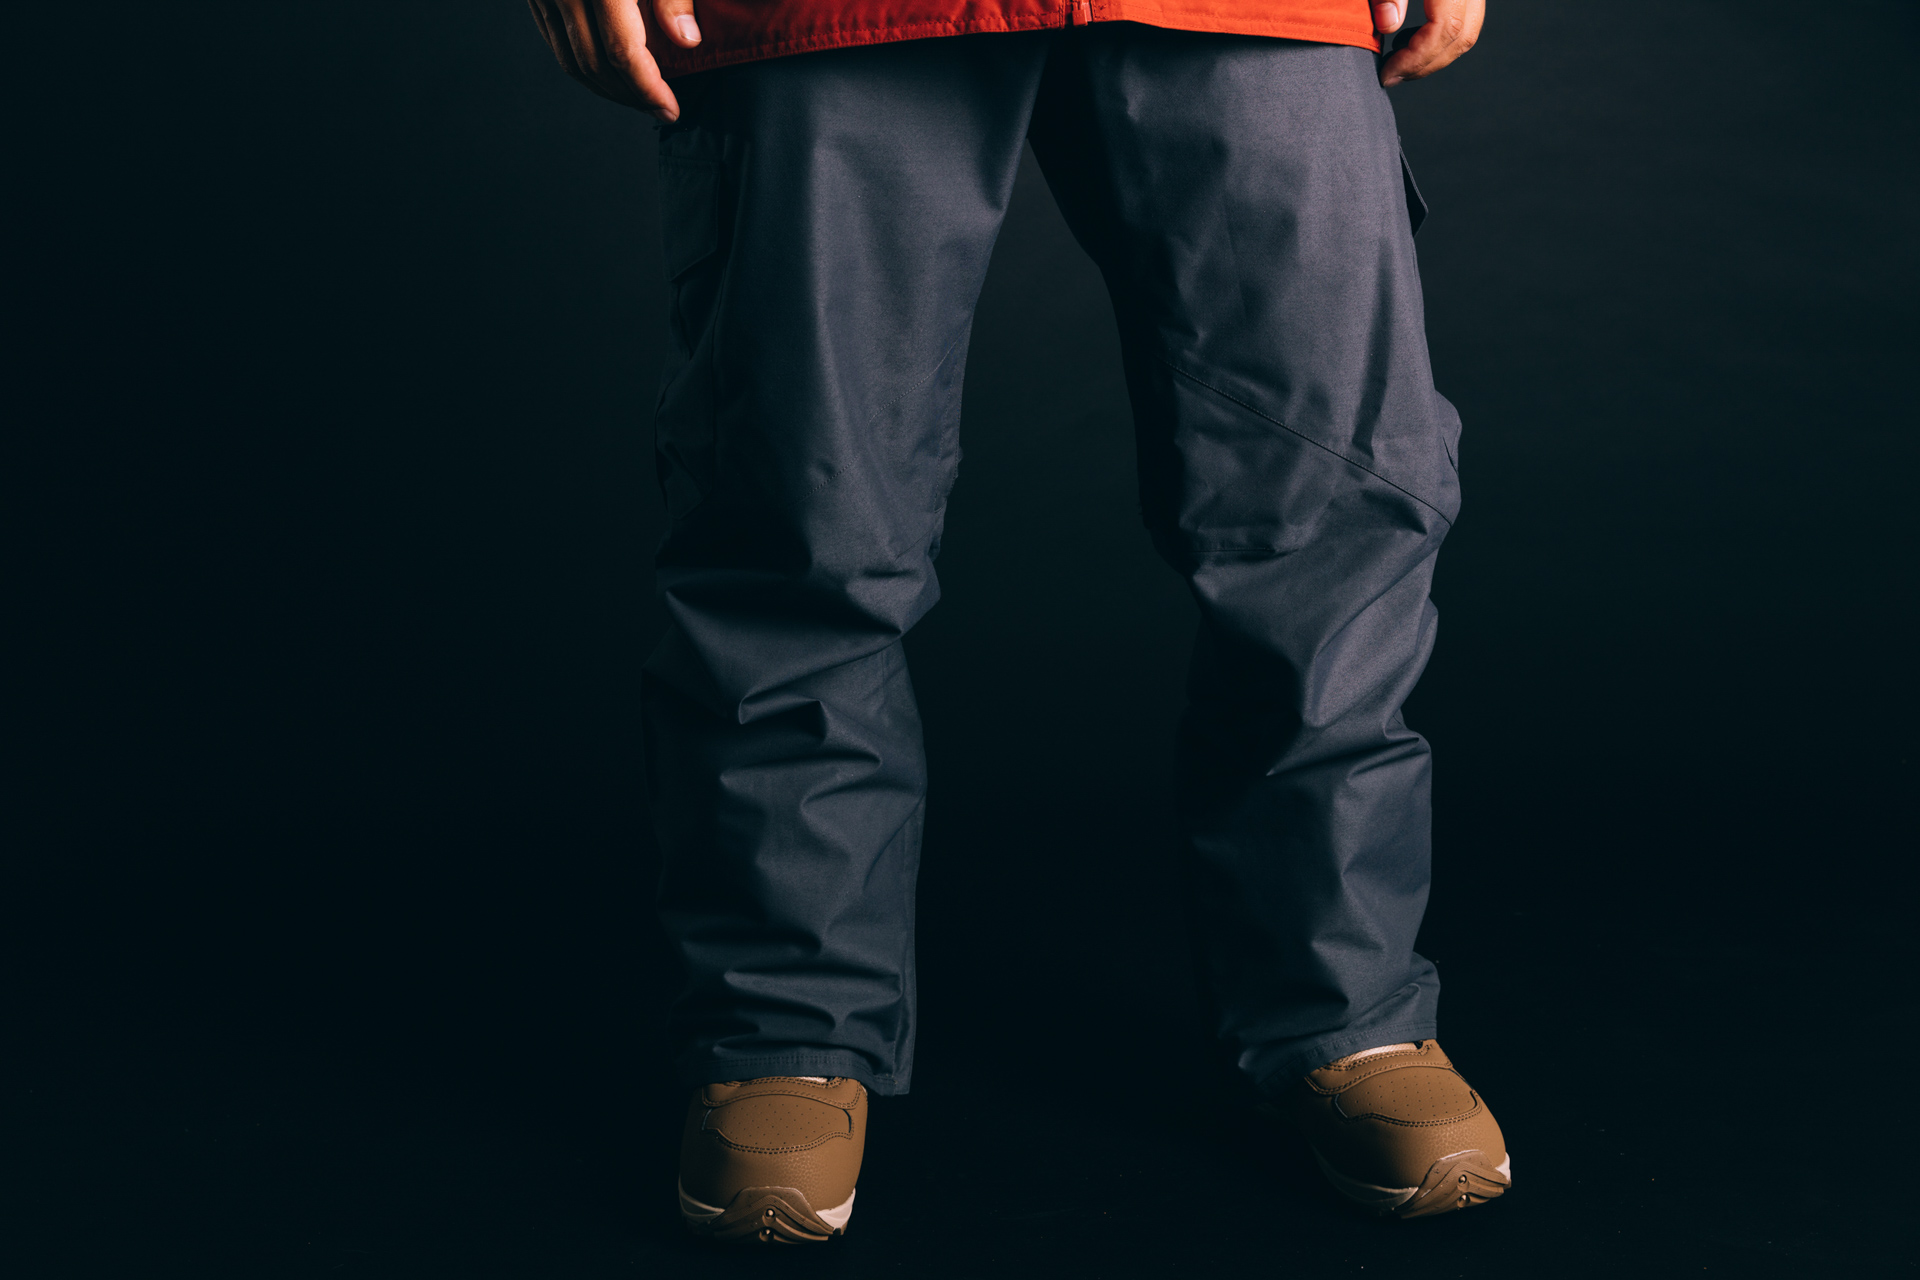 Burton Cargo Shell Snowboard Pants (Men's)